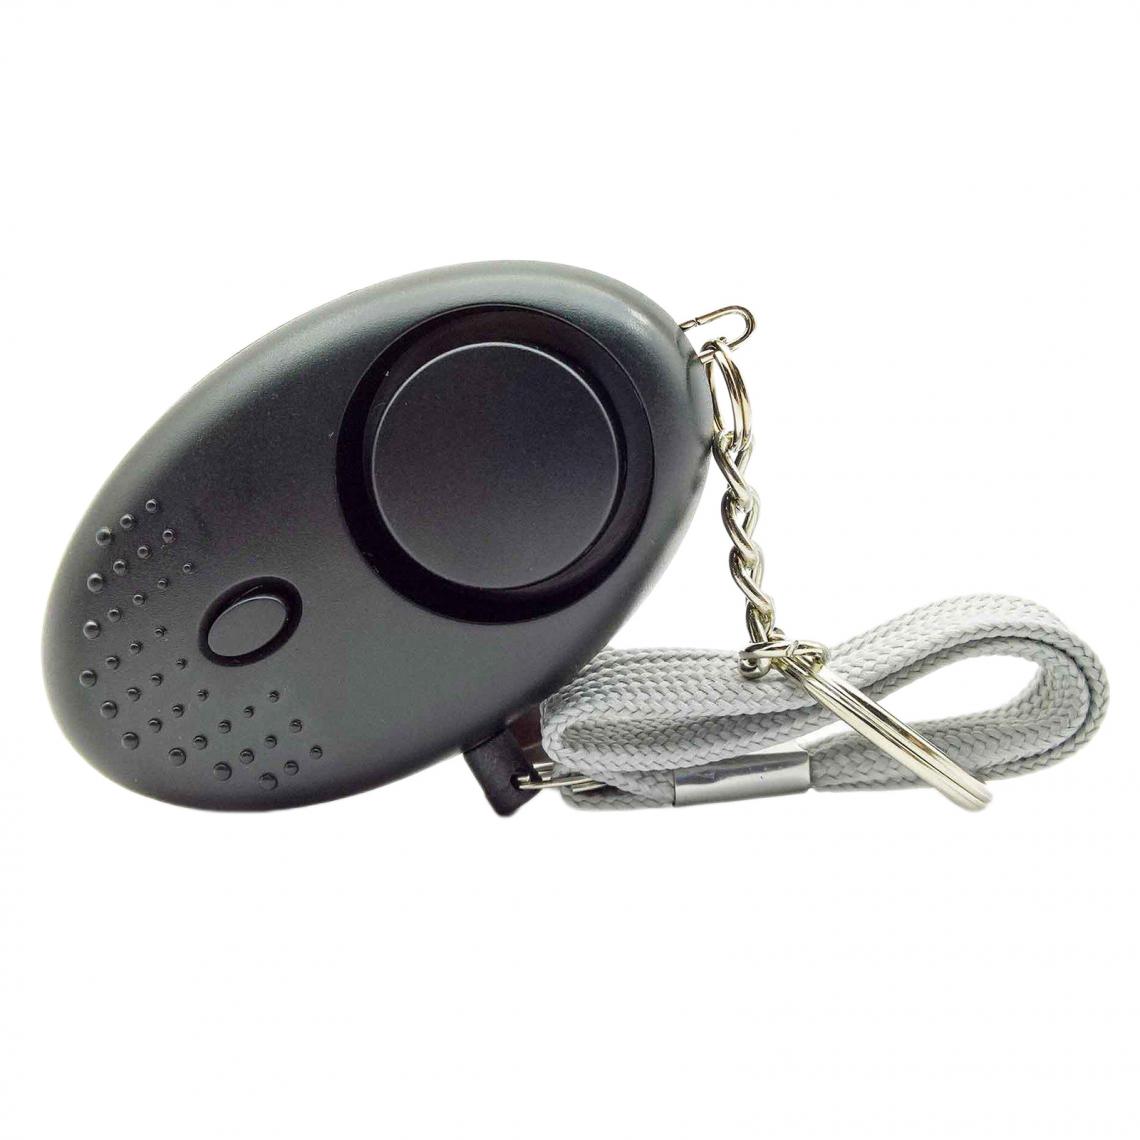 marque generique - Safe Sound Personal Alarm 130DB Security Alarm Keychain For Women Silver - Alarme connectée